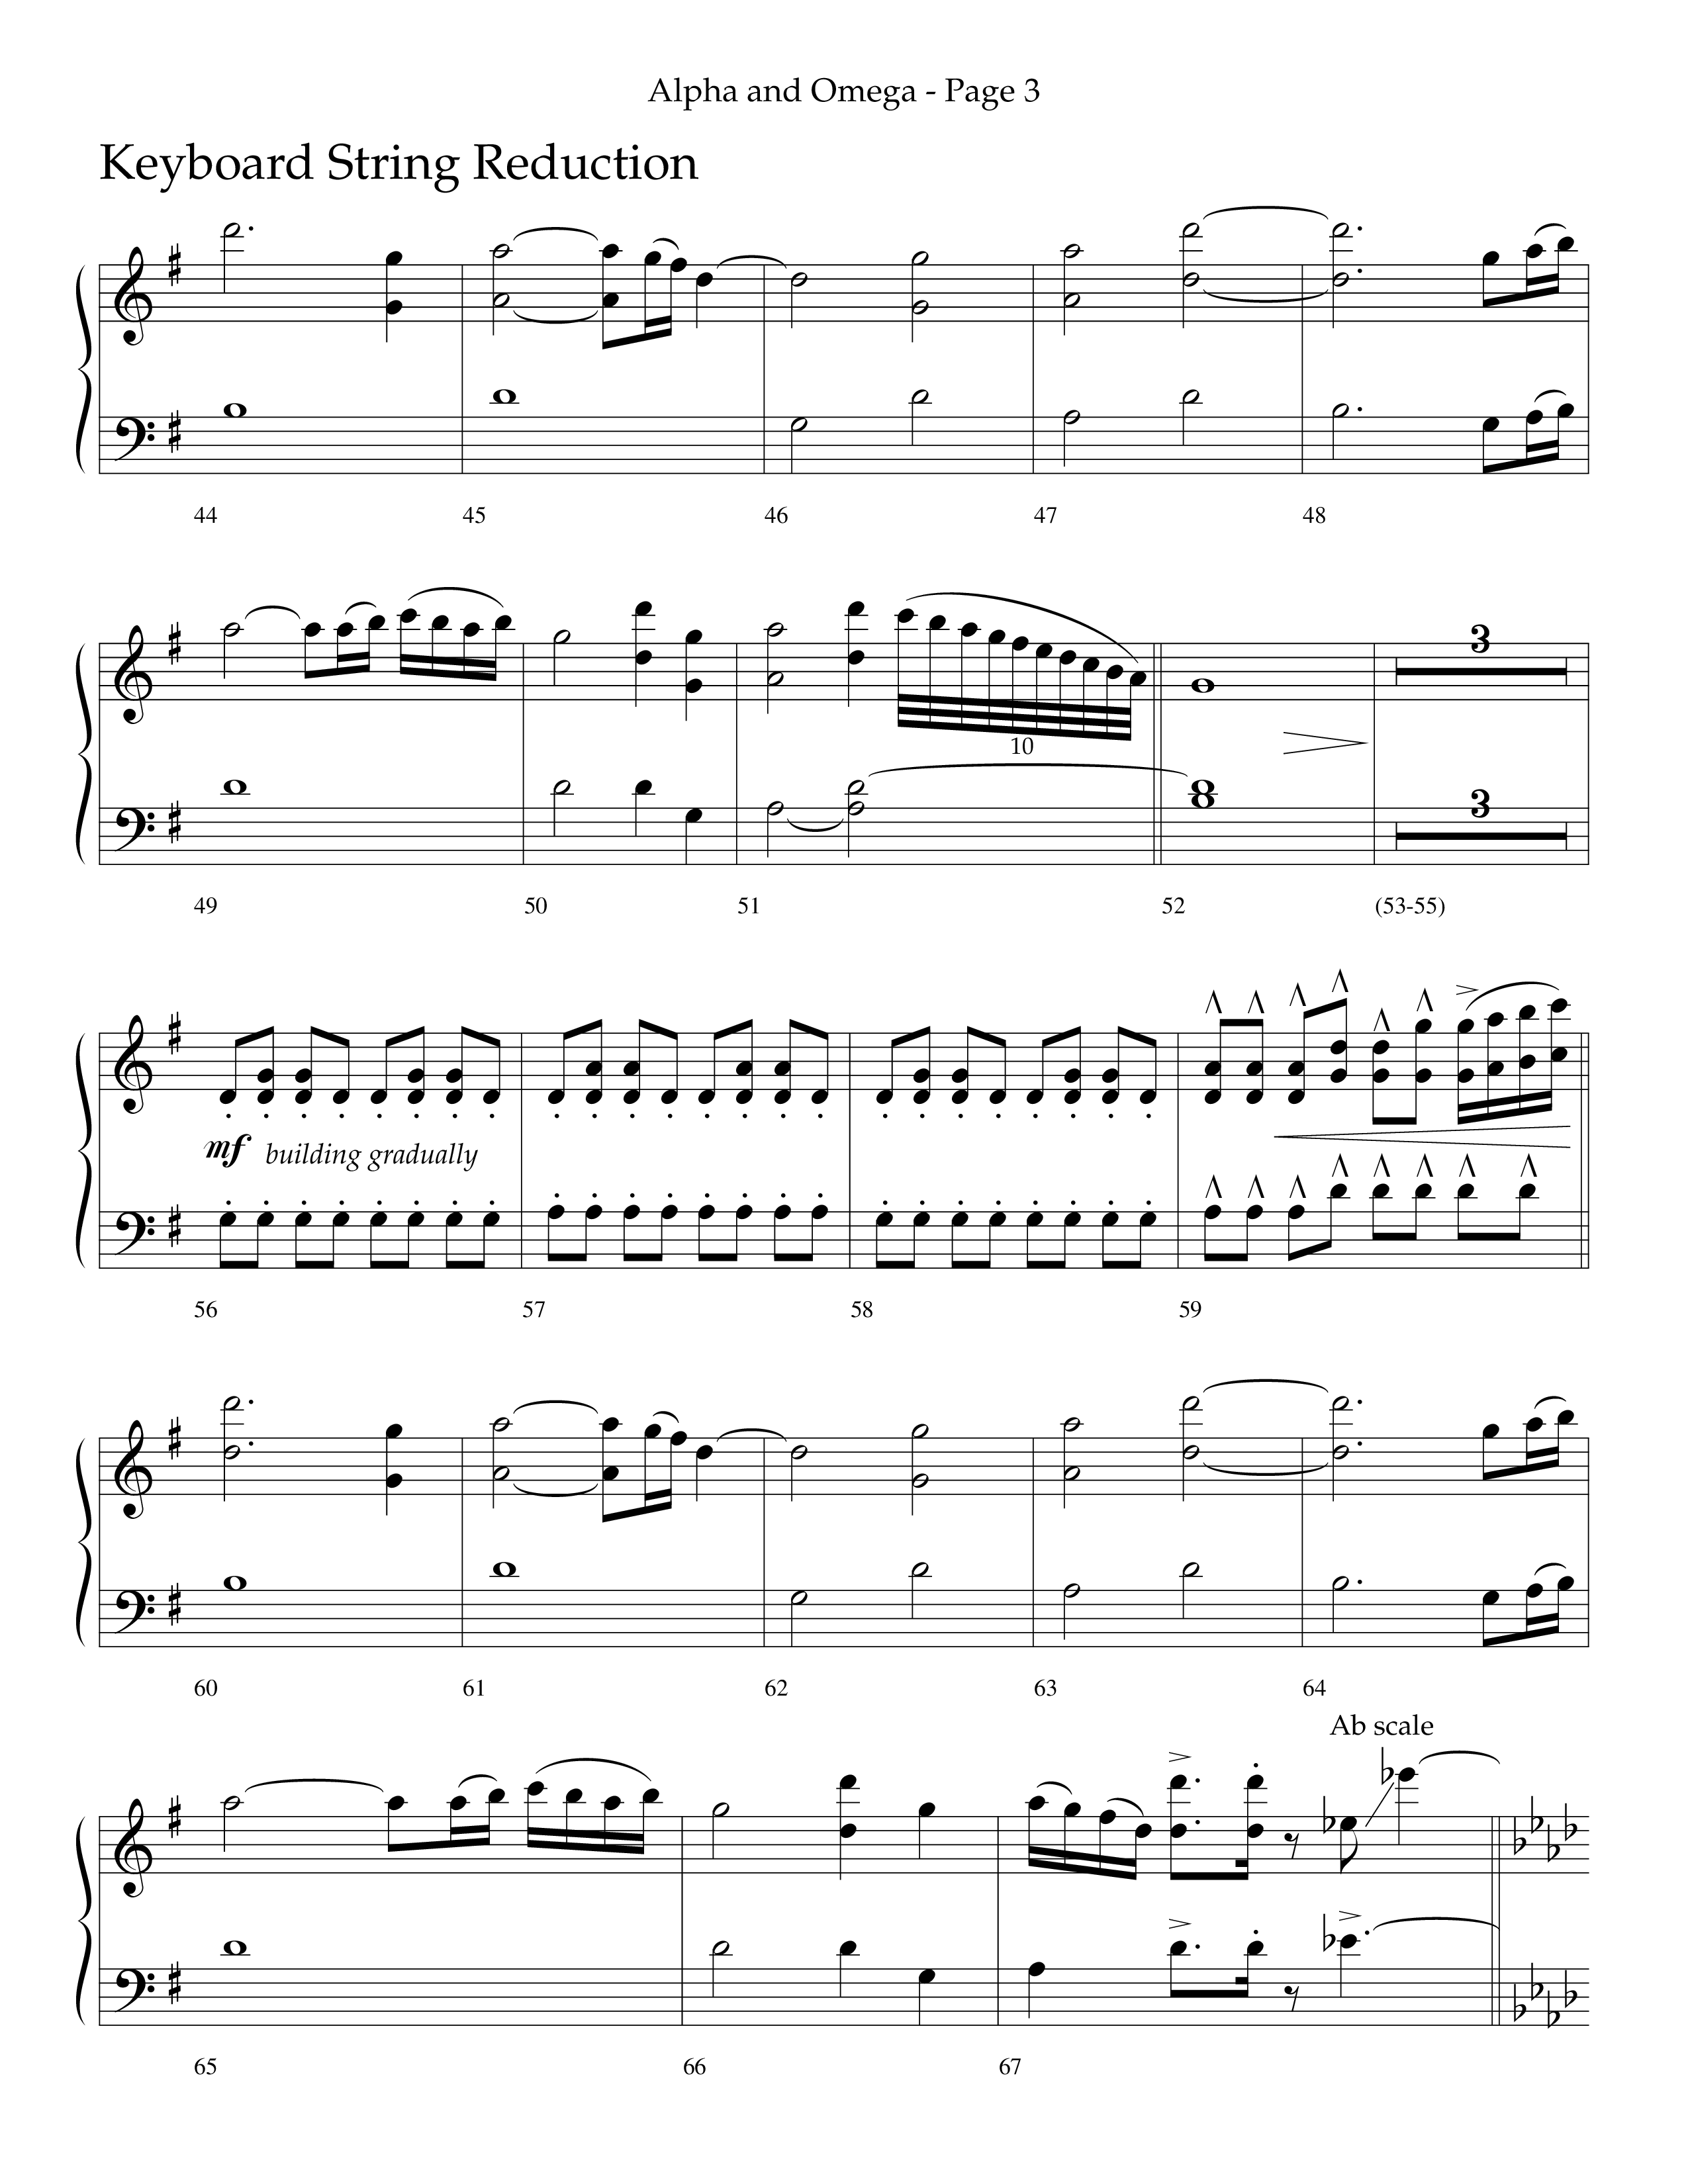 Alpha And Omega (Choral Anthem SATB) String Reduction (Lifeway Choral / Arr. Cliff Duren)